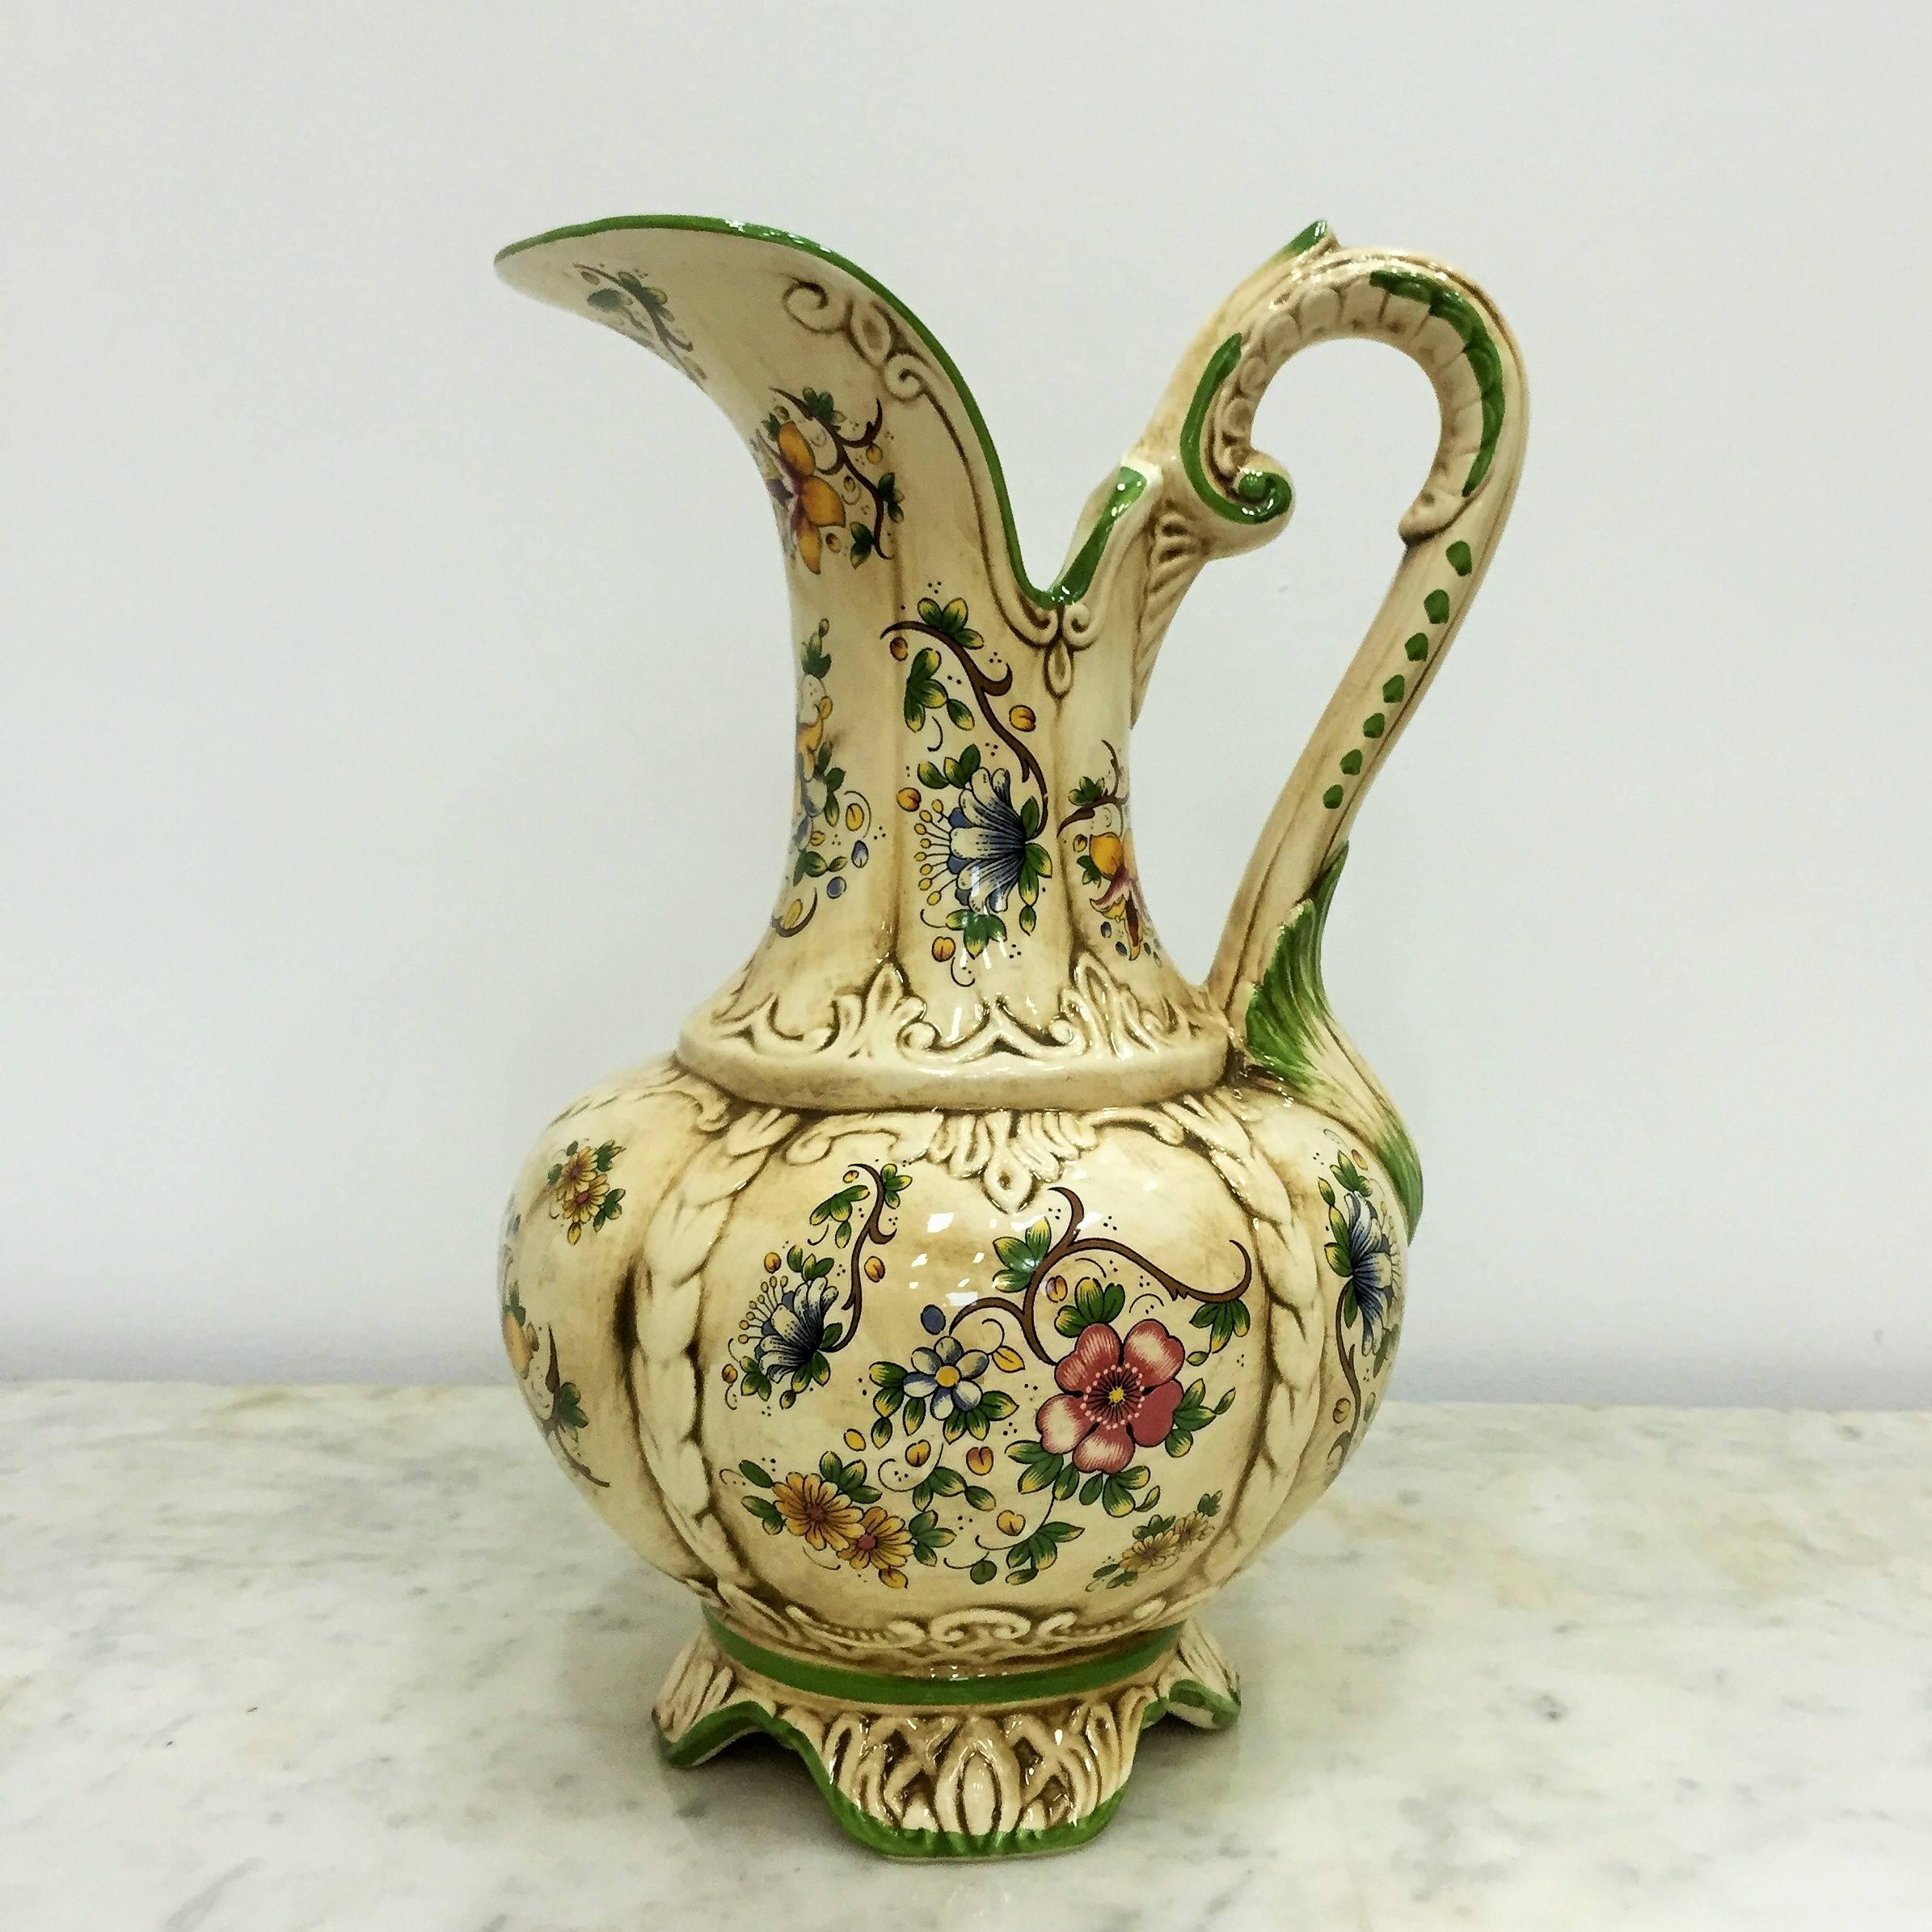 20th century porcelain Capodimonte ornamental urn or jar.